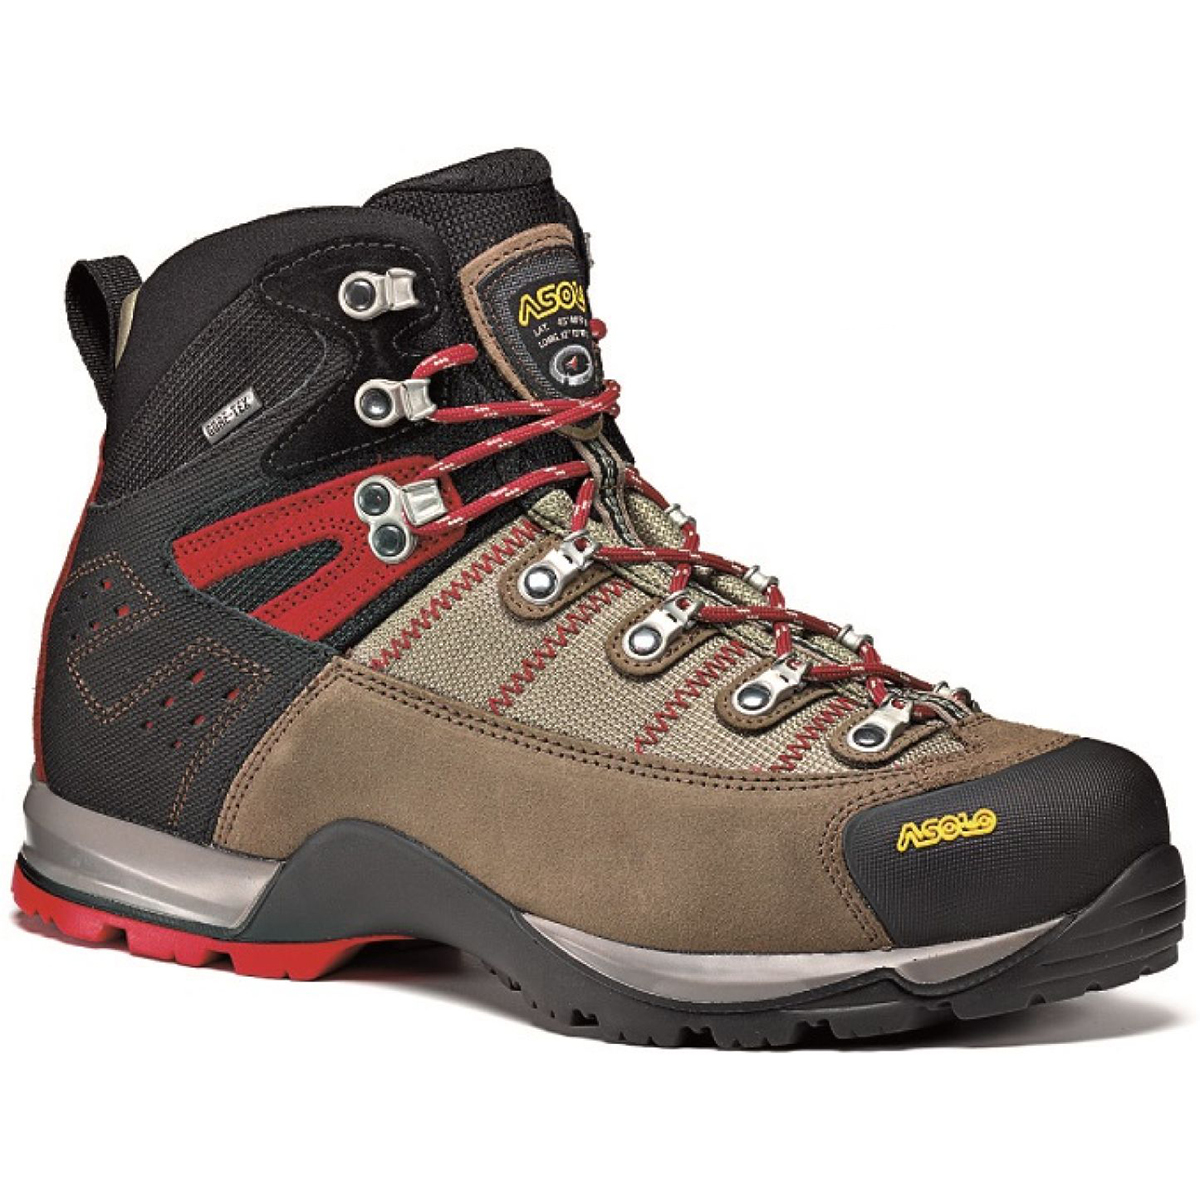 Asolo Men's Fugitive Gtx Hiking Boots, Wide